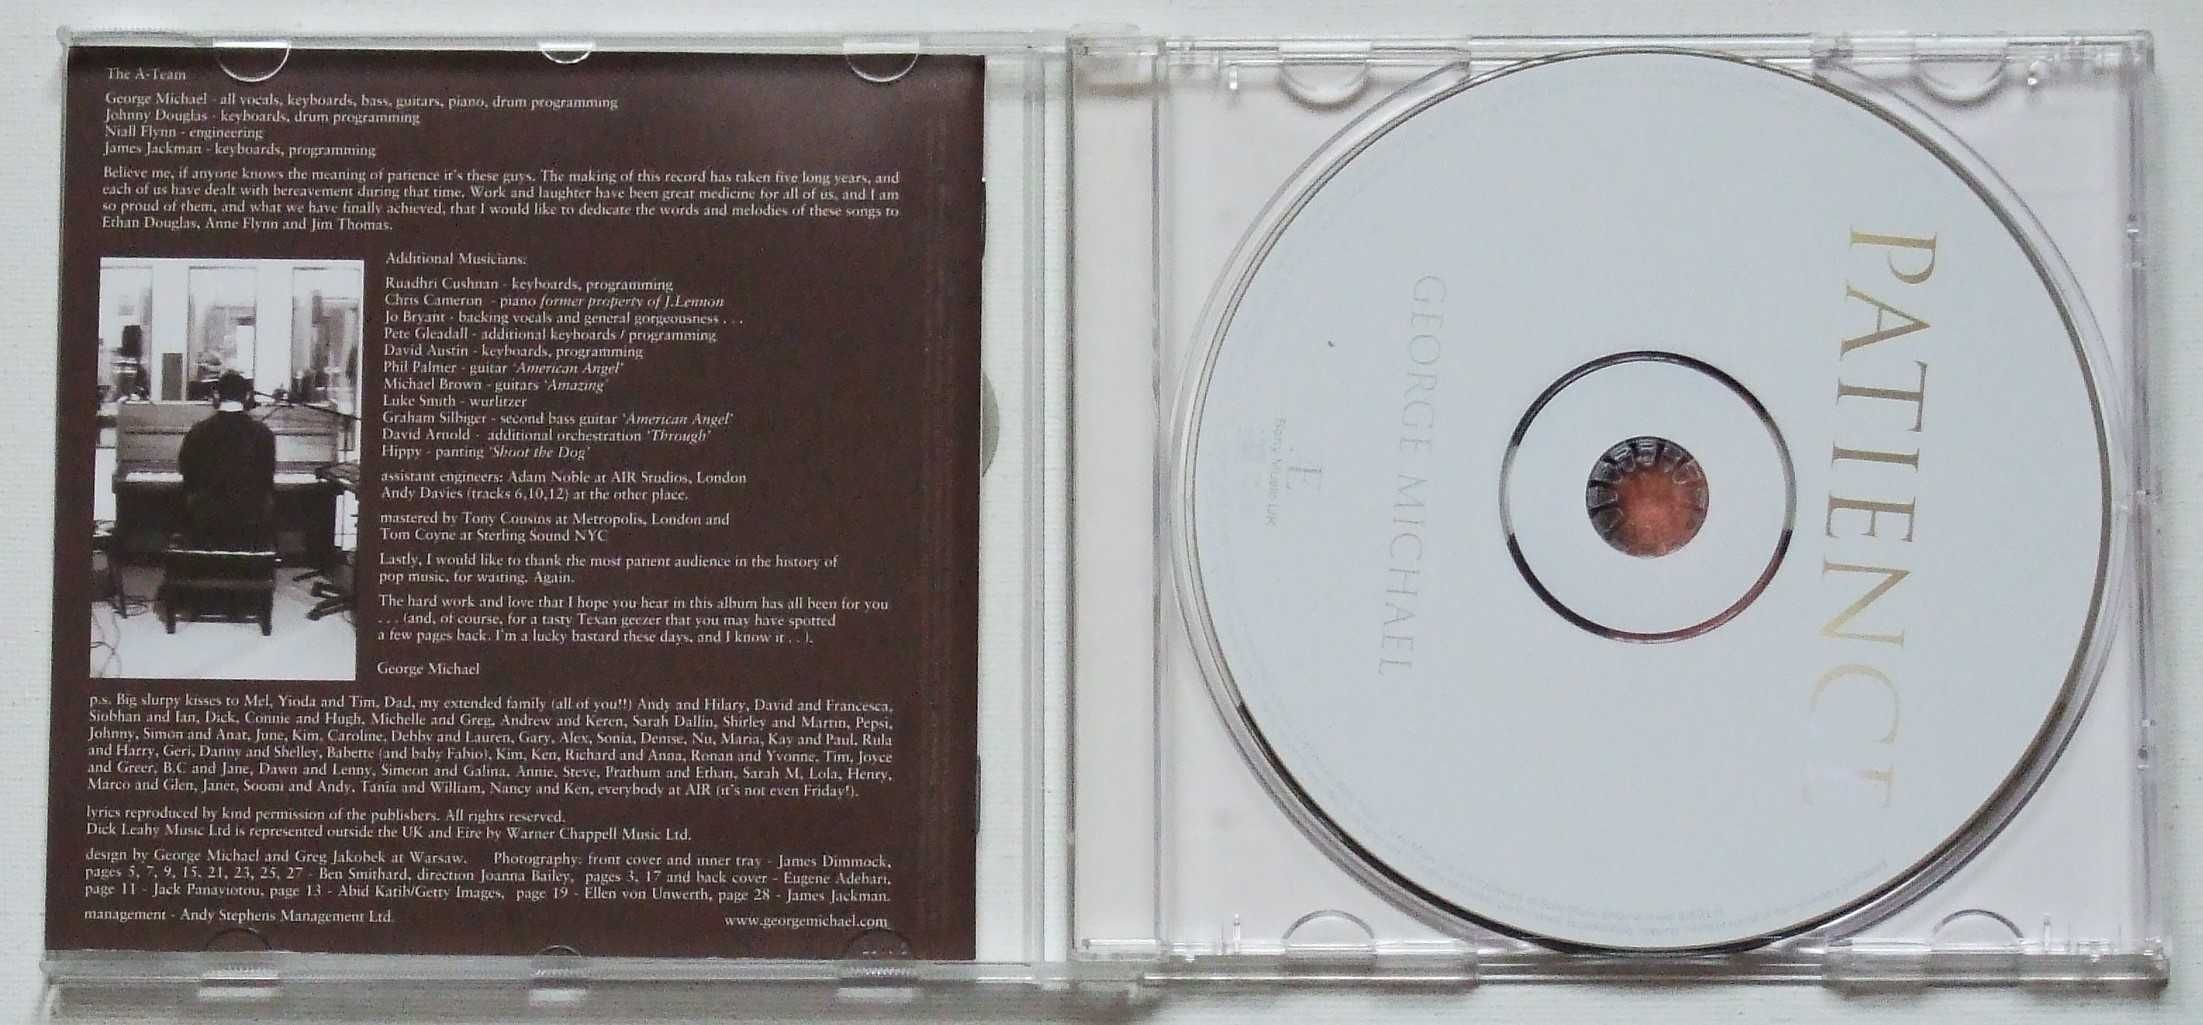 George Michael – Patience, CD